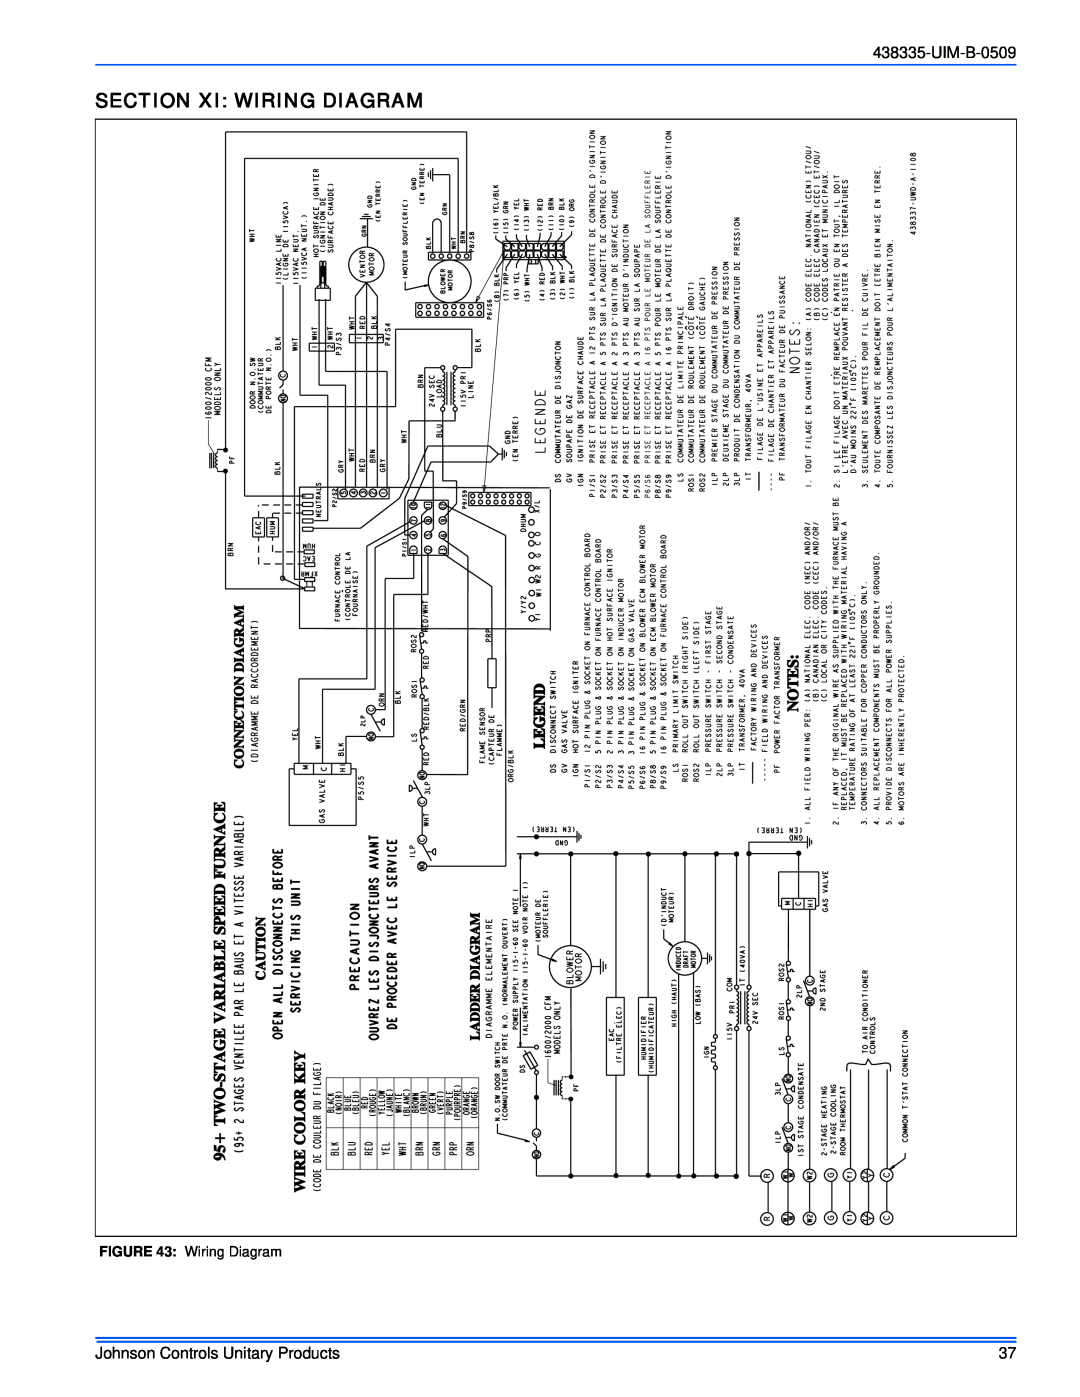 Johnson Controls TM9V MP installation manual Section Xi Wiring Diagram, UIM-B-0509, Johnson Controls Unitary Products 